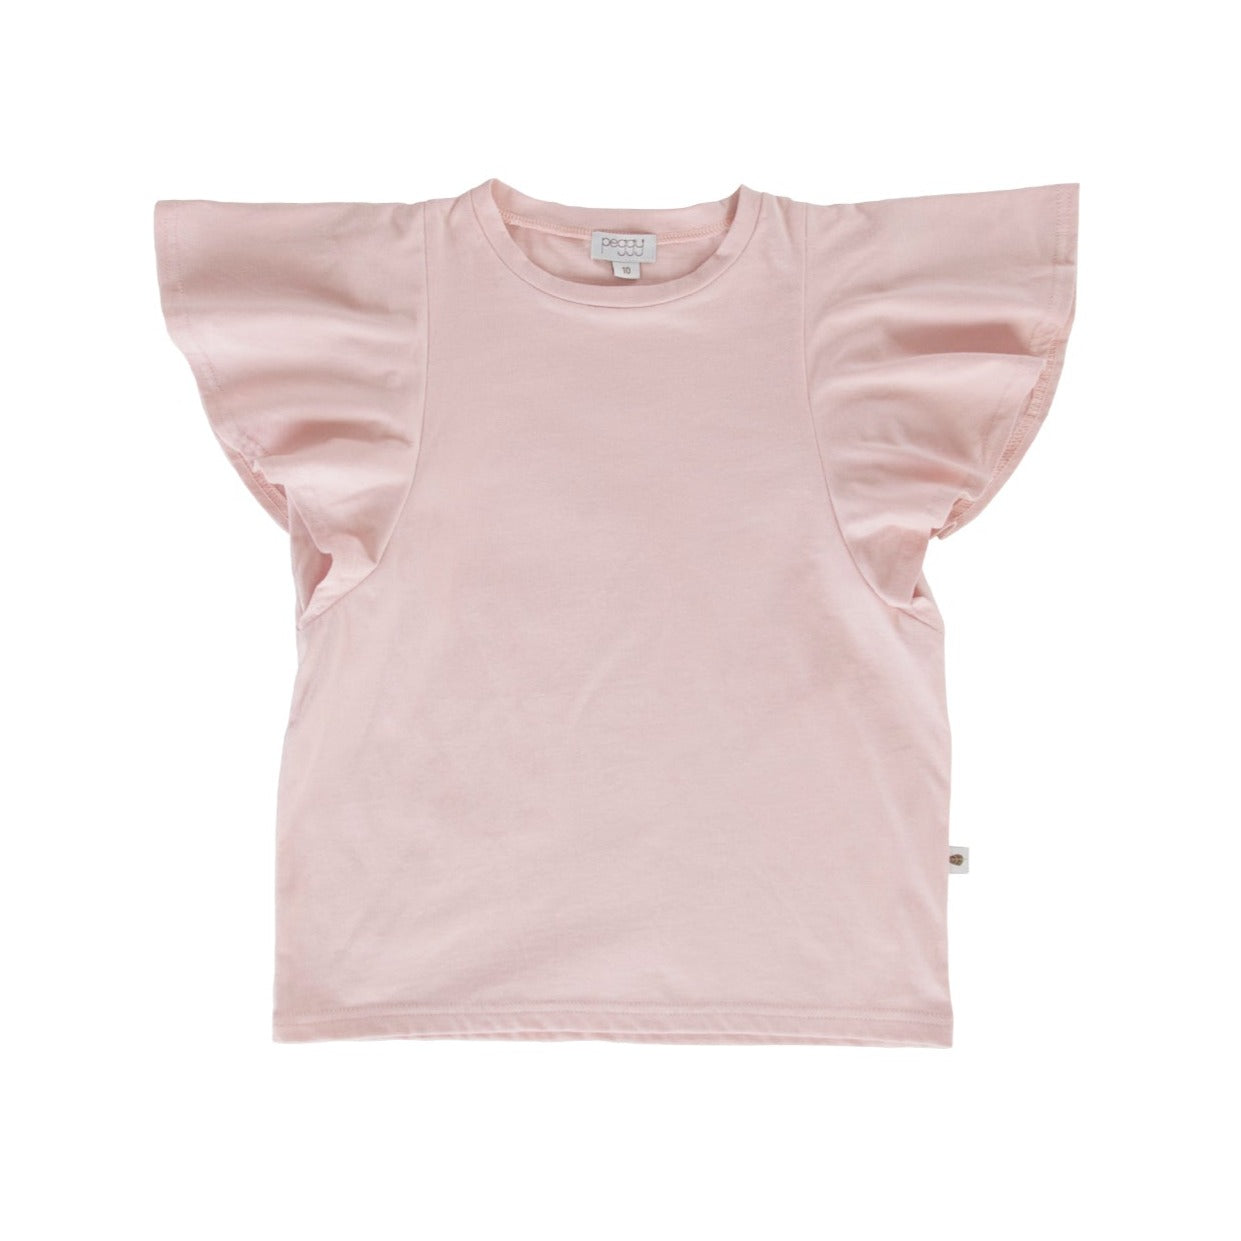 Light pink ruffle short sleeve girls cotton tee  on white background